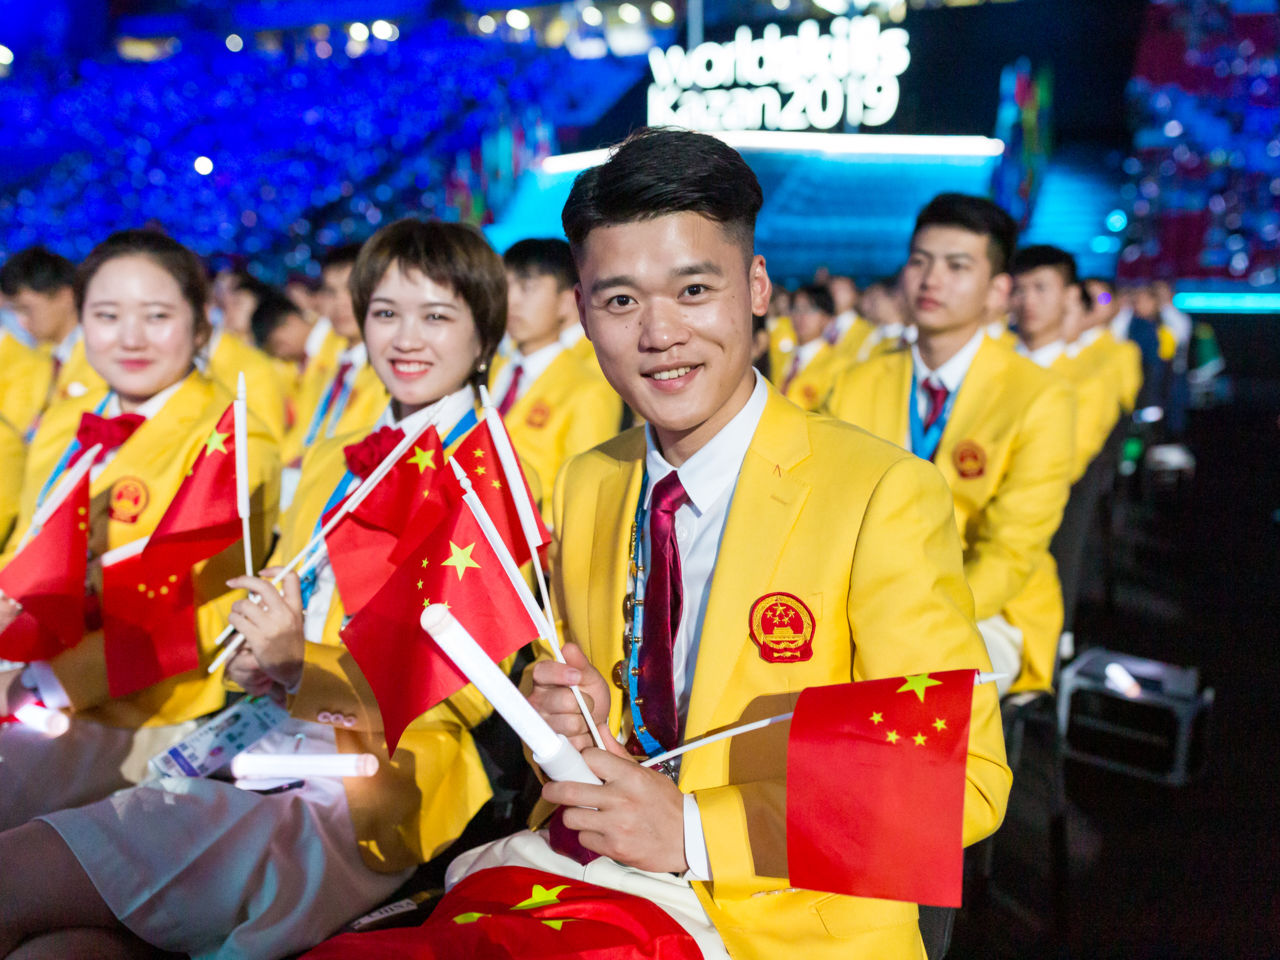 One year until WorldSkills Shanghai 2021